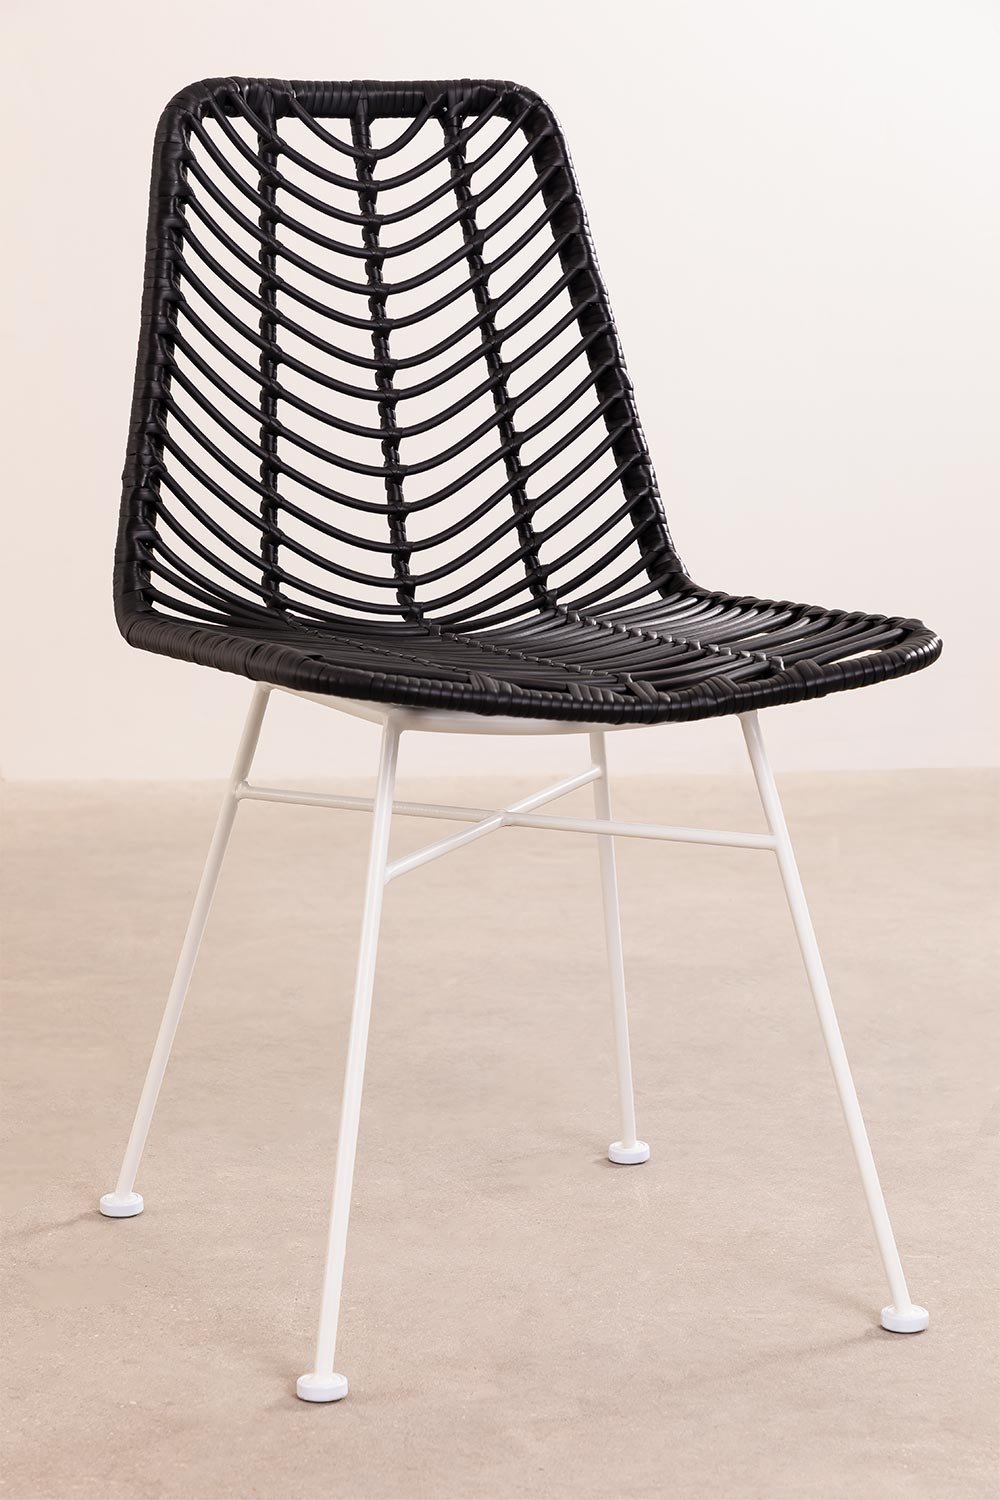 Gouda Colors rattan garden chair, gallery image 1